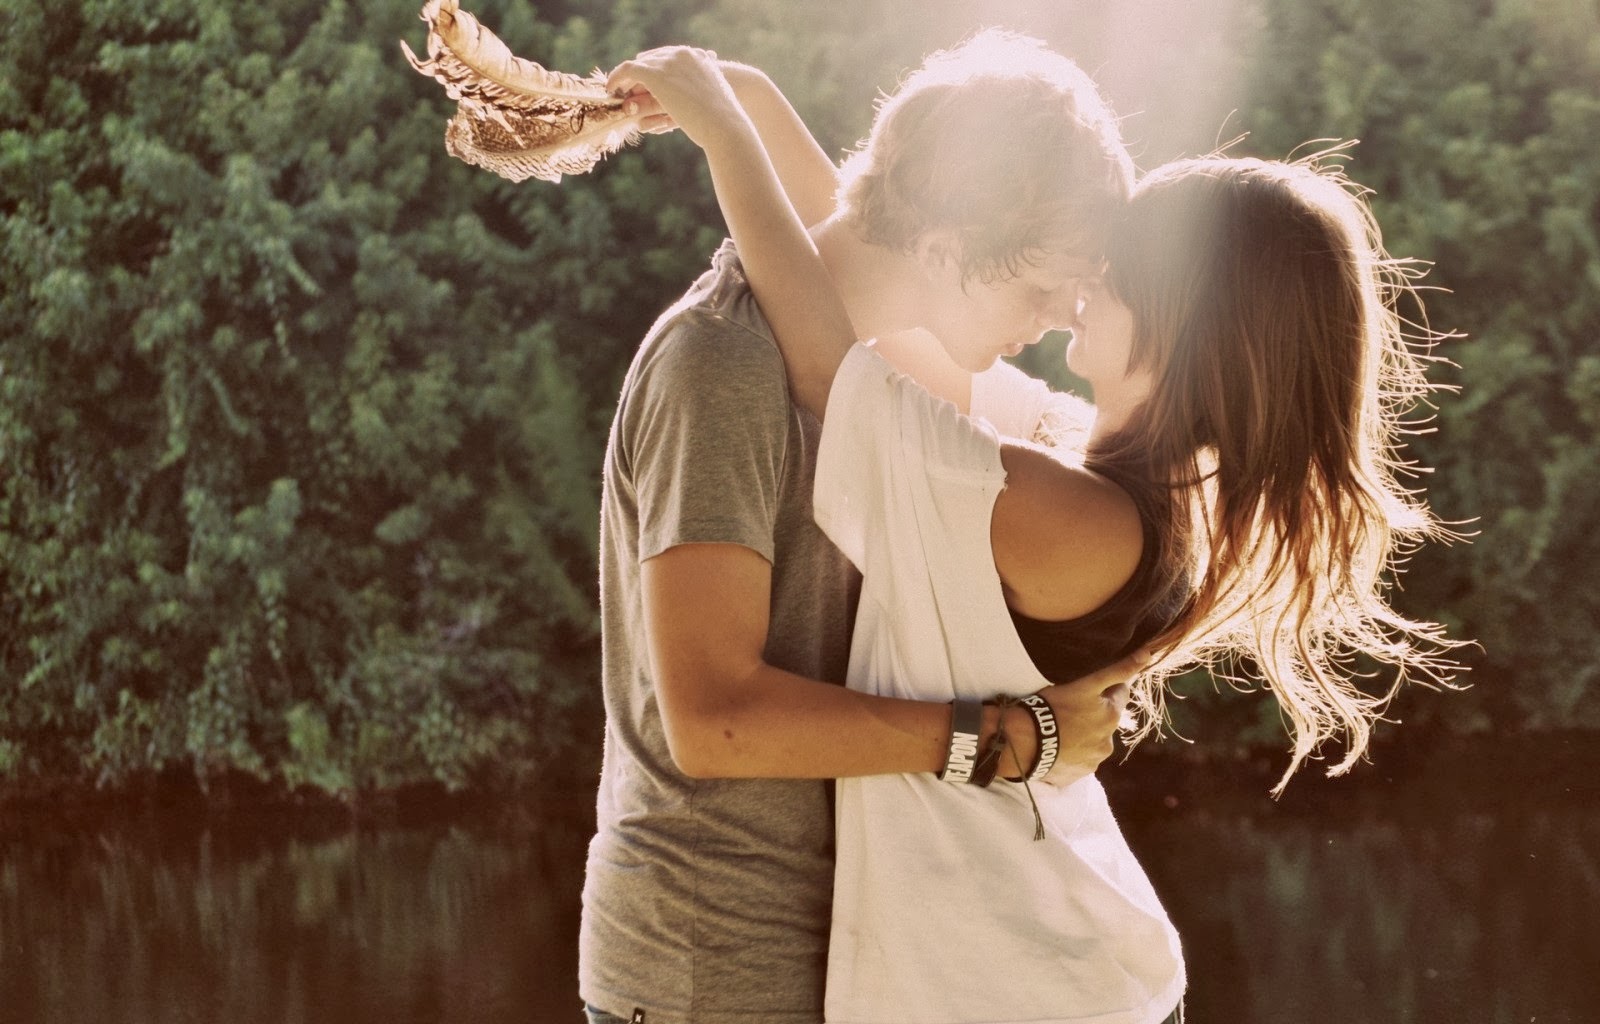 Hug Day Romantic Couple Images HD Wallpapers Pics: